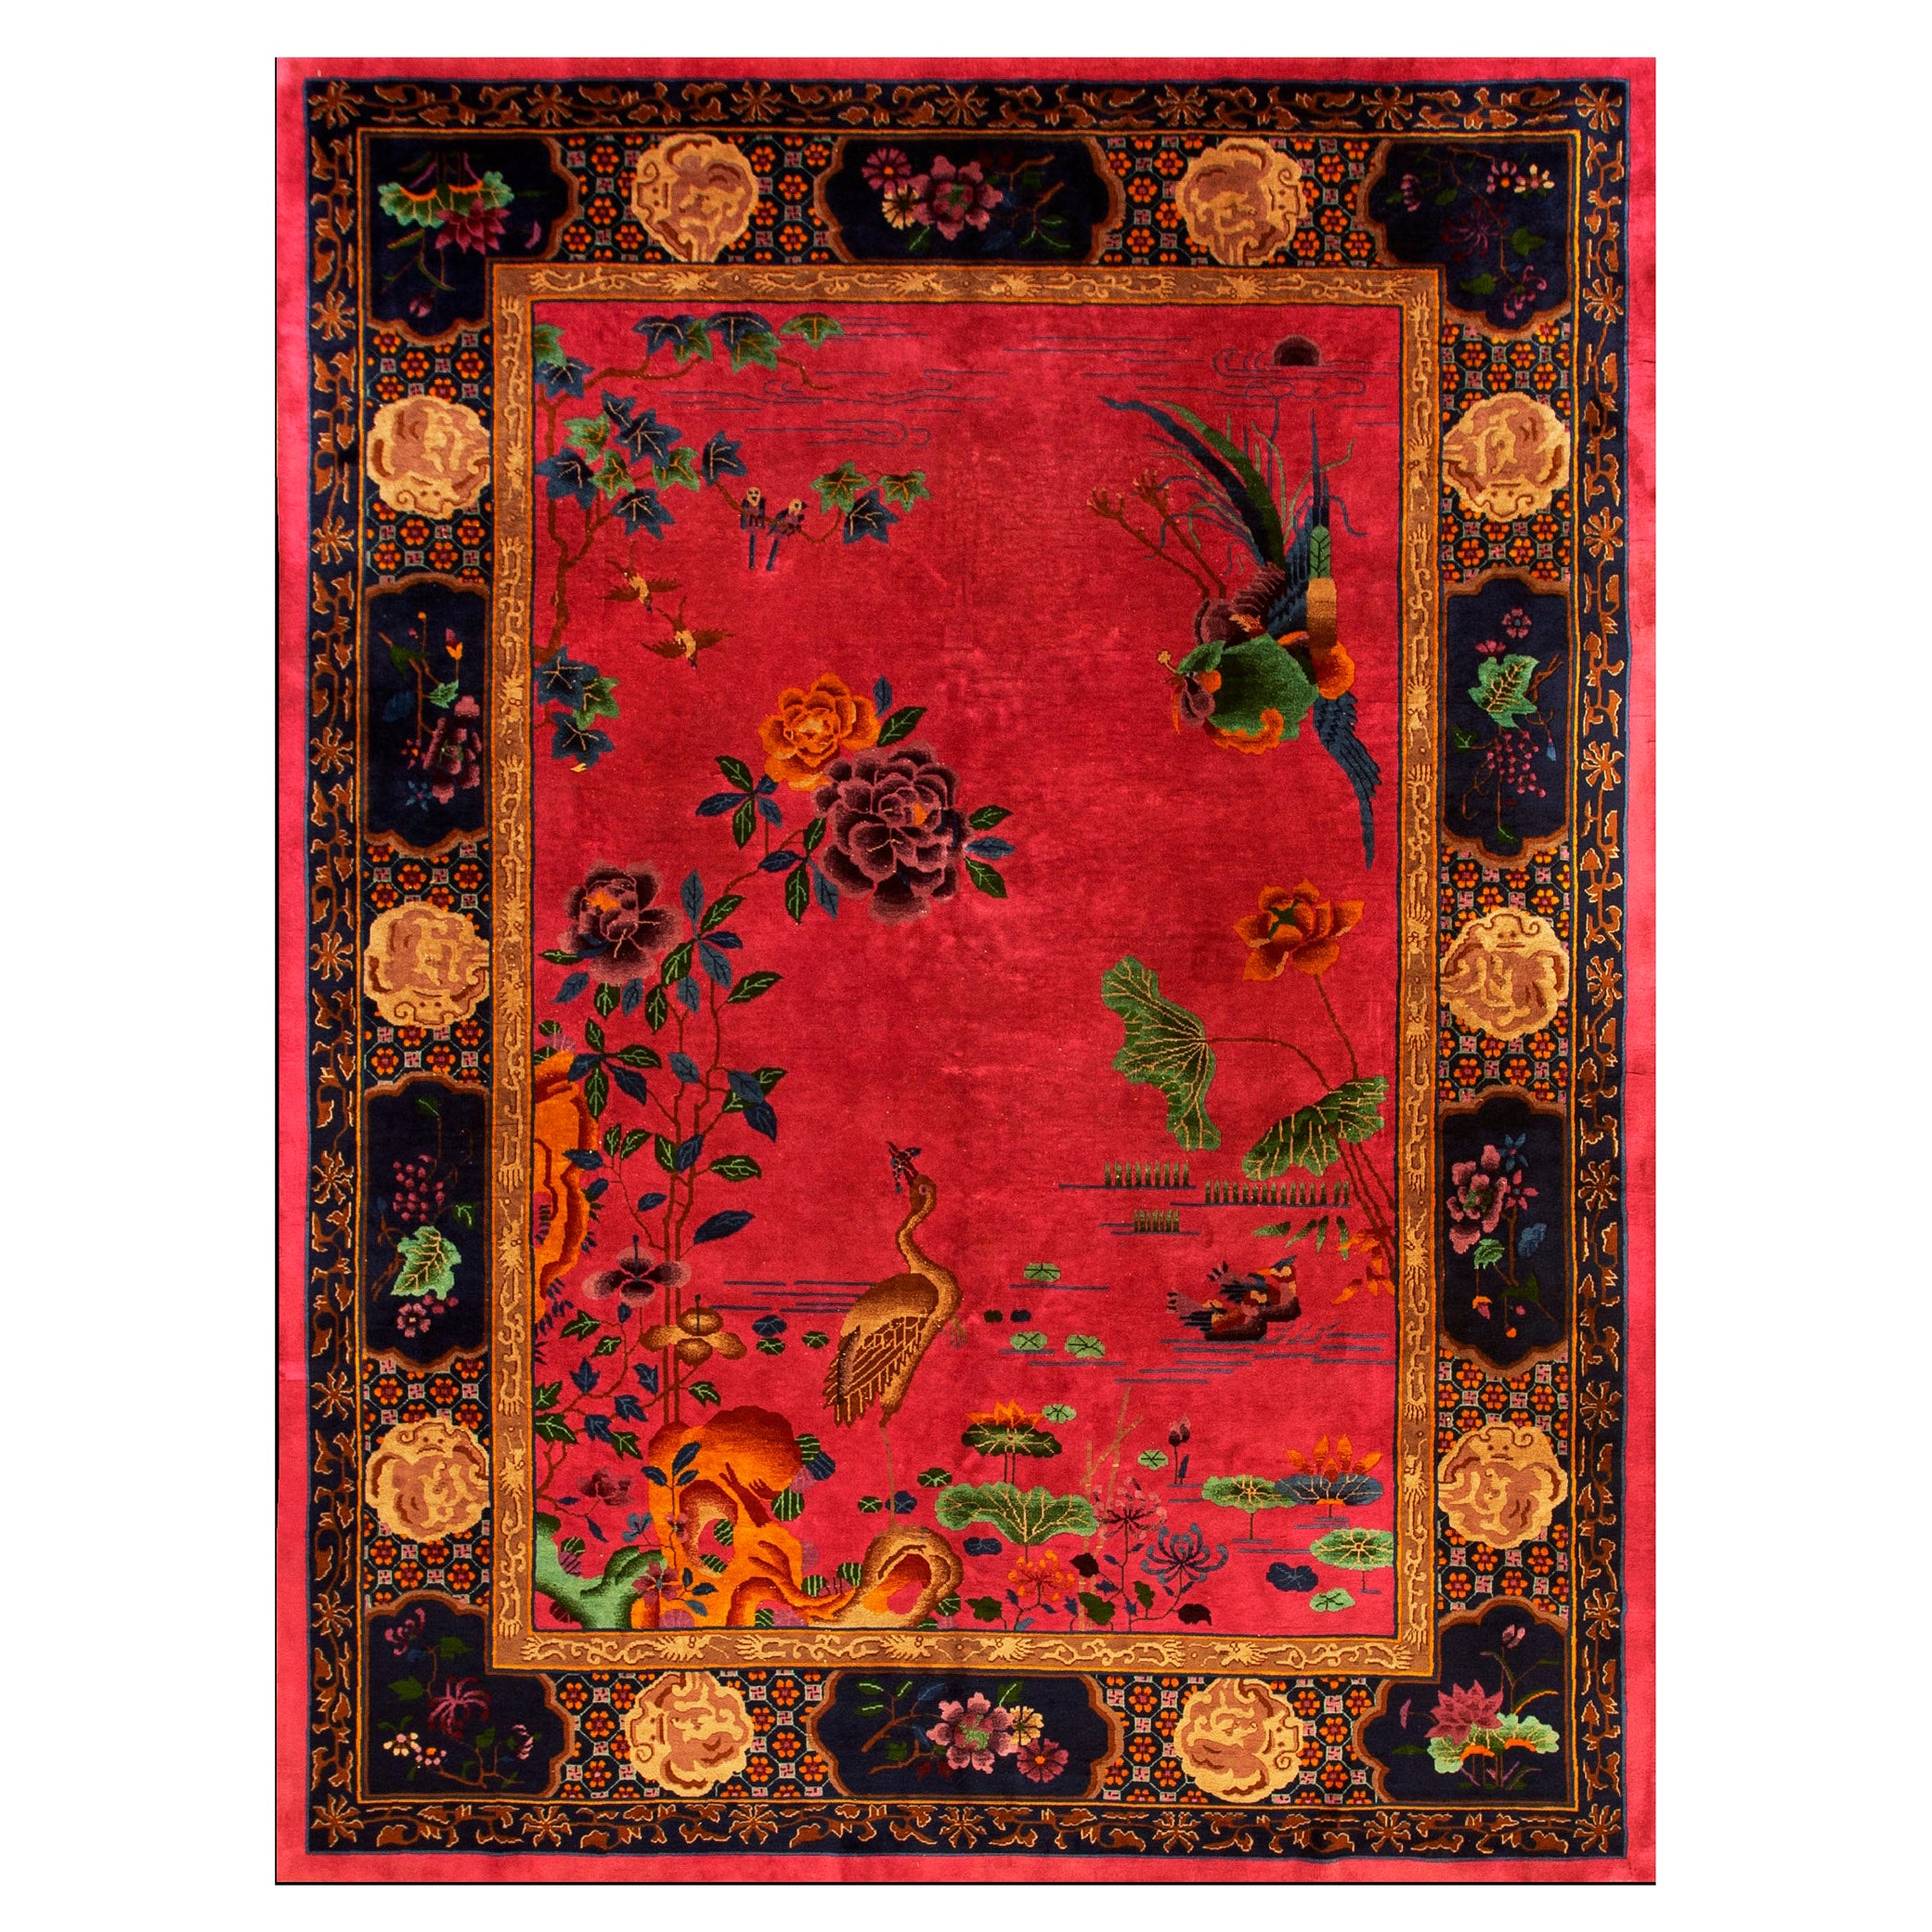 1920s Chinese Art Deco Carpet ( 8' 9" x 11' 8" - 266x 355 cm )